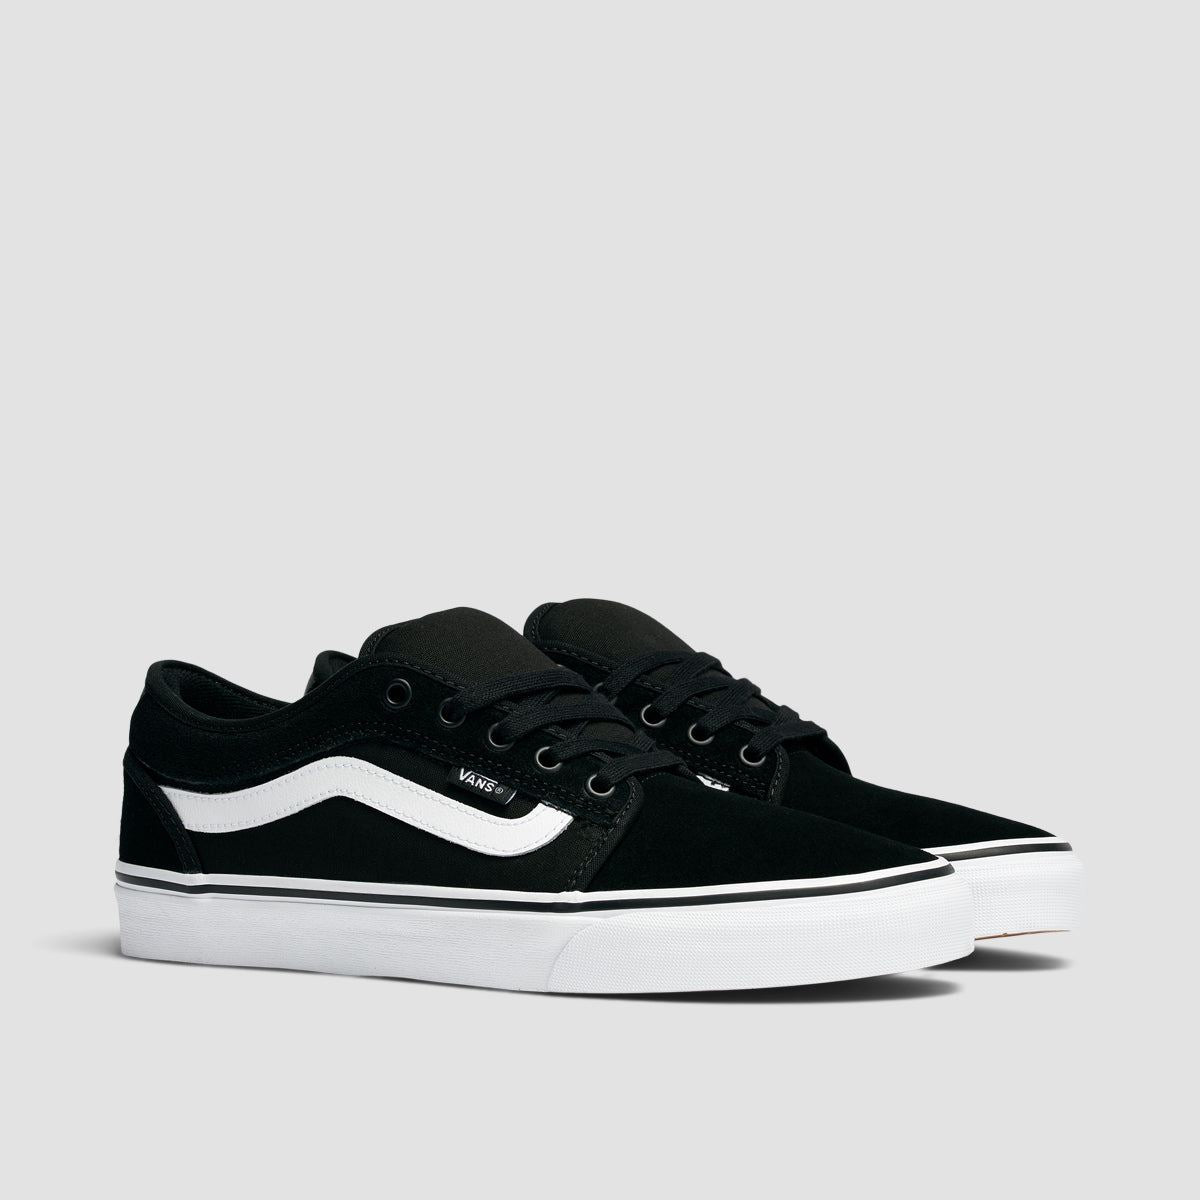 Vans Chukka Sidestripe Shoes - Black/White